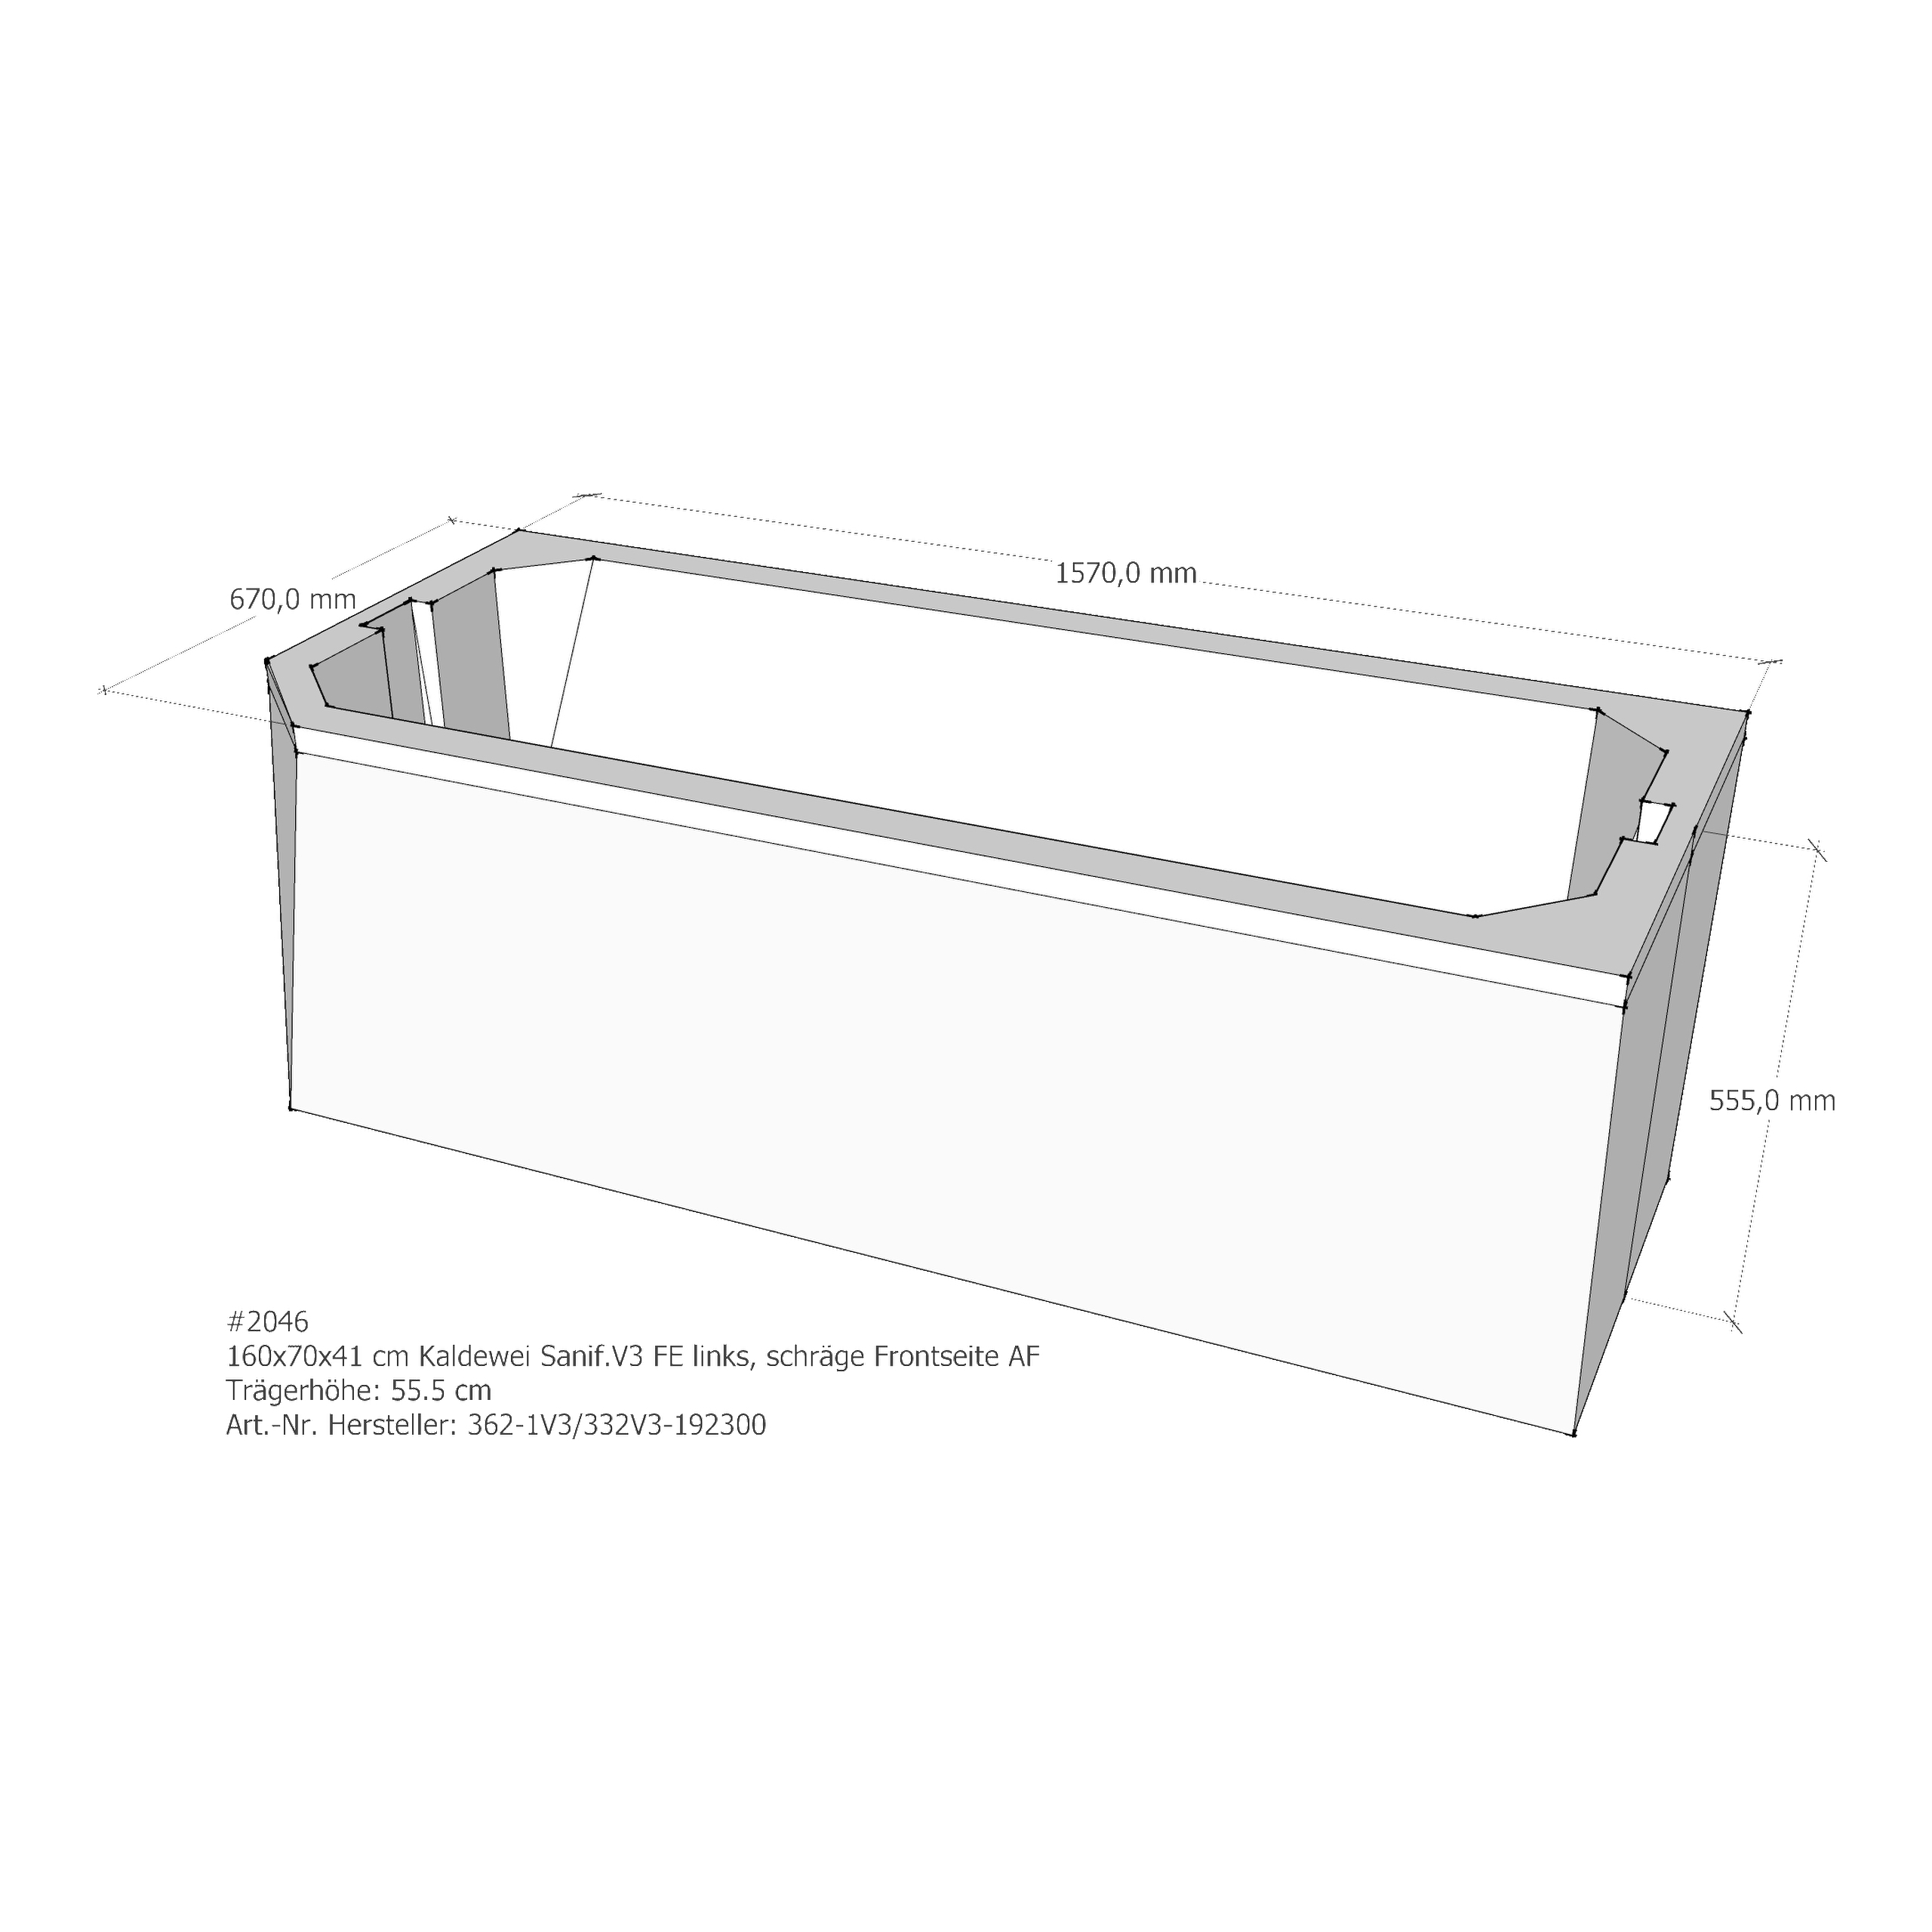 Badewannenträger für Kaldewei Saniform V3 FE links 160 × 70 × 41 cm